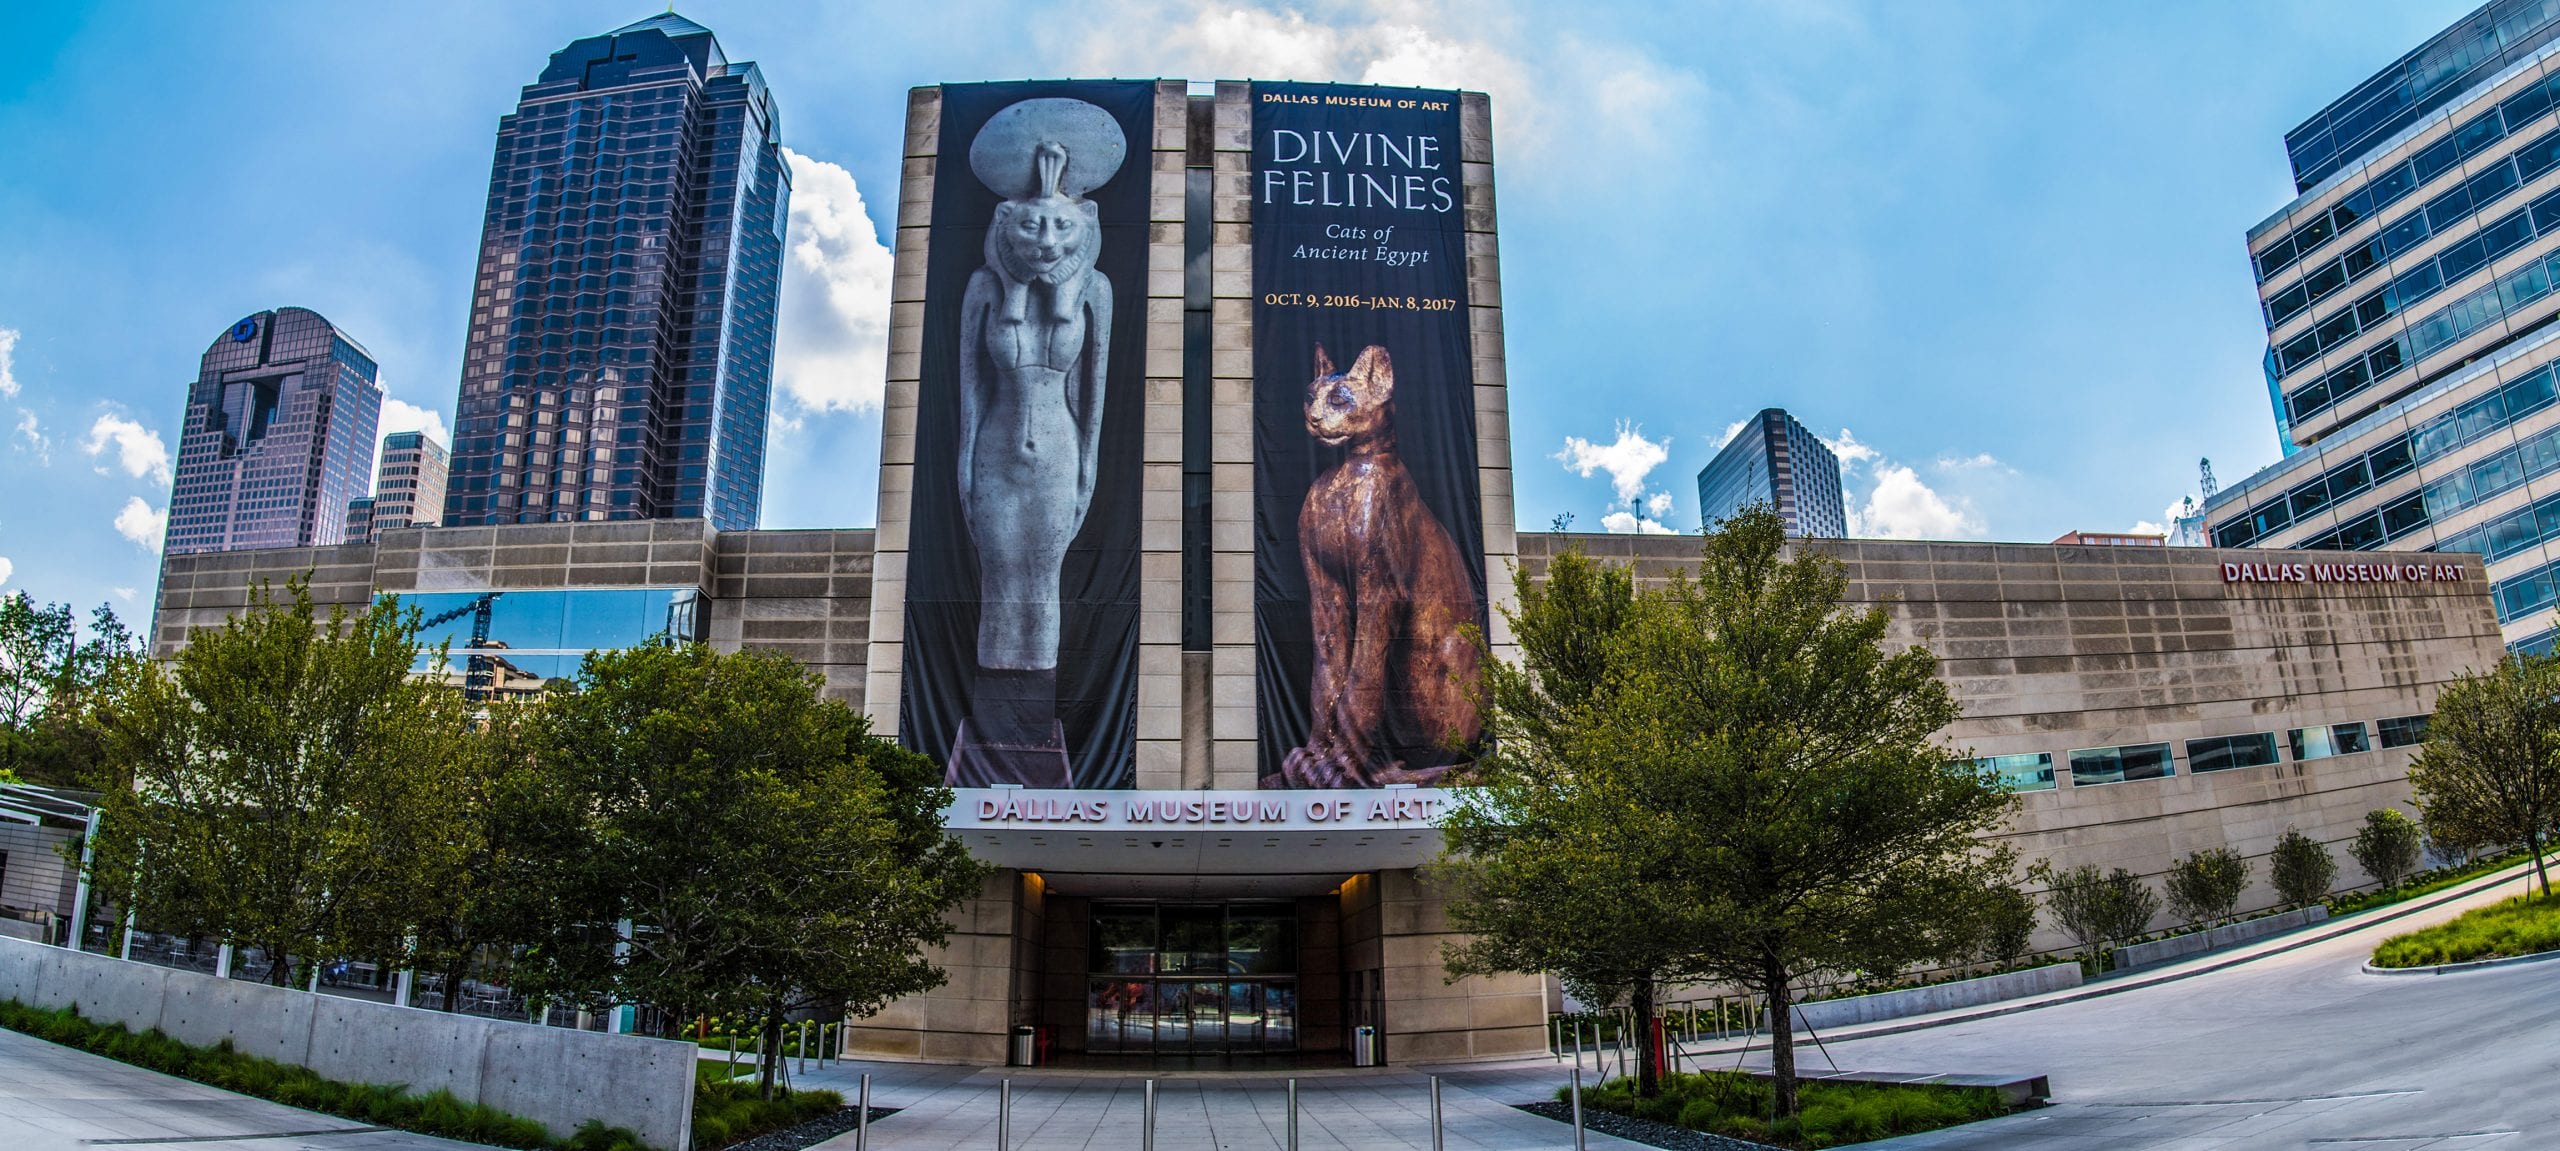 Photo: Dallas Museum of Art